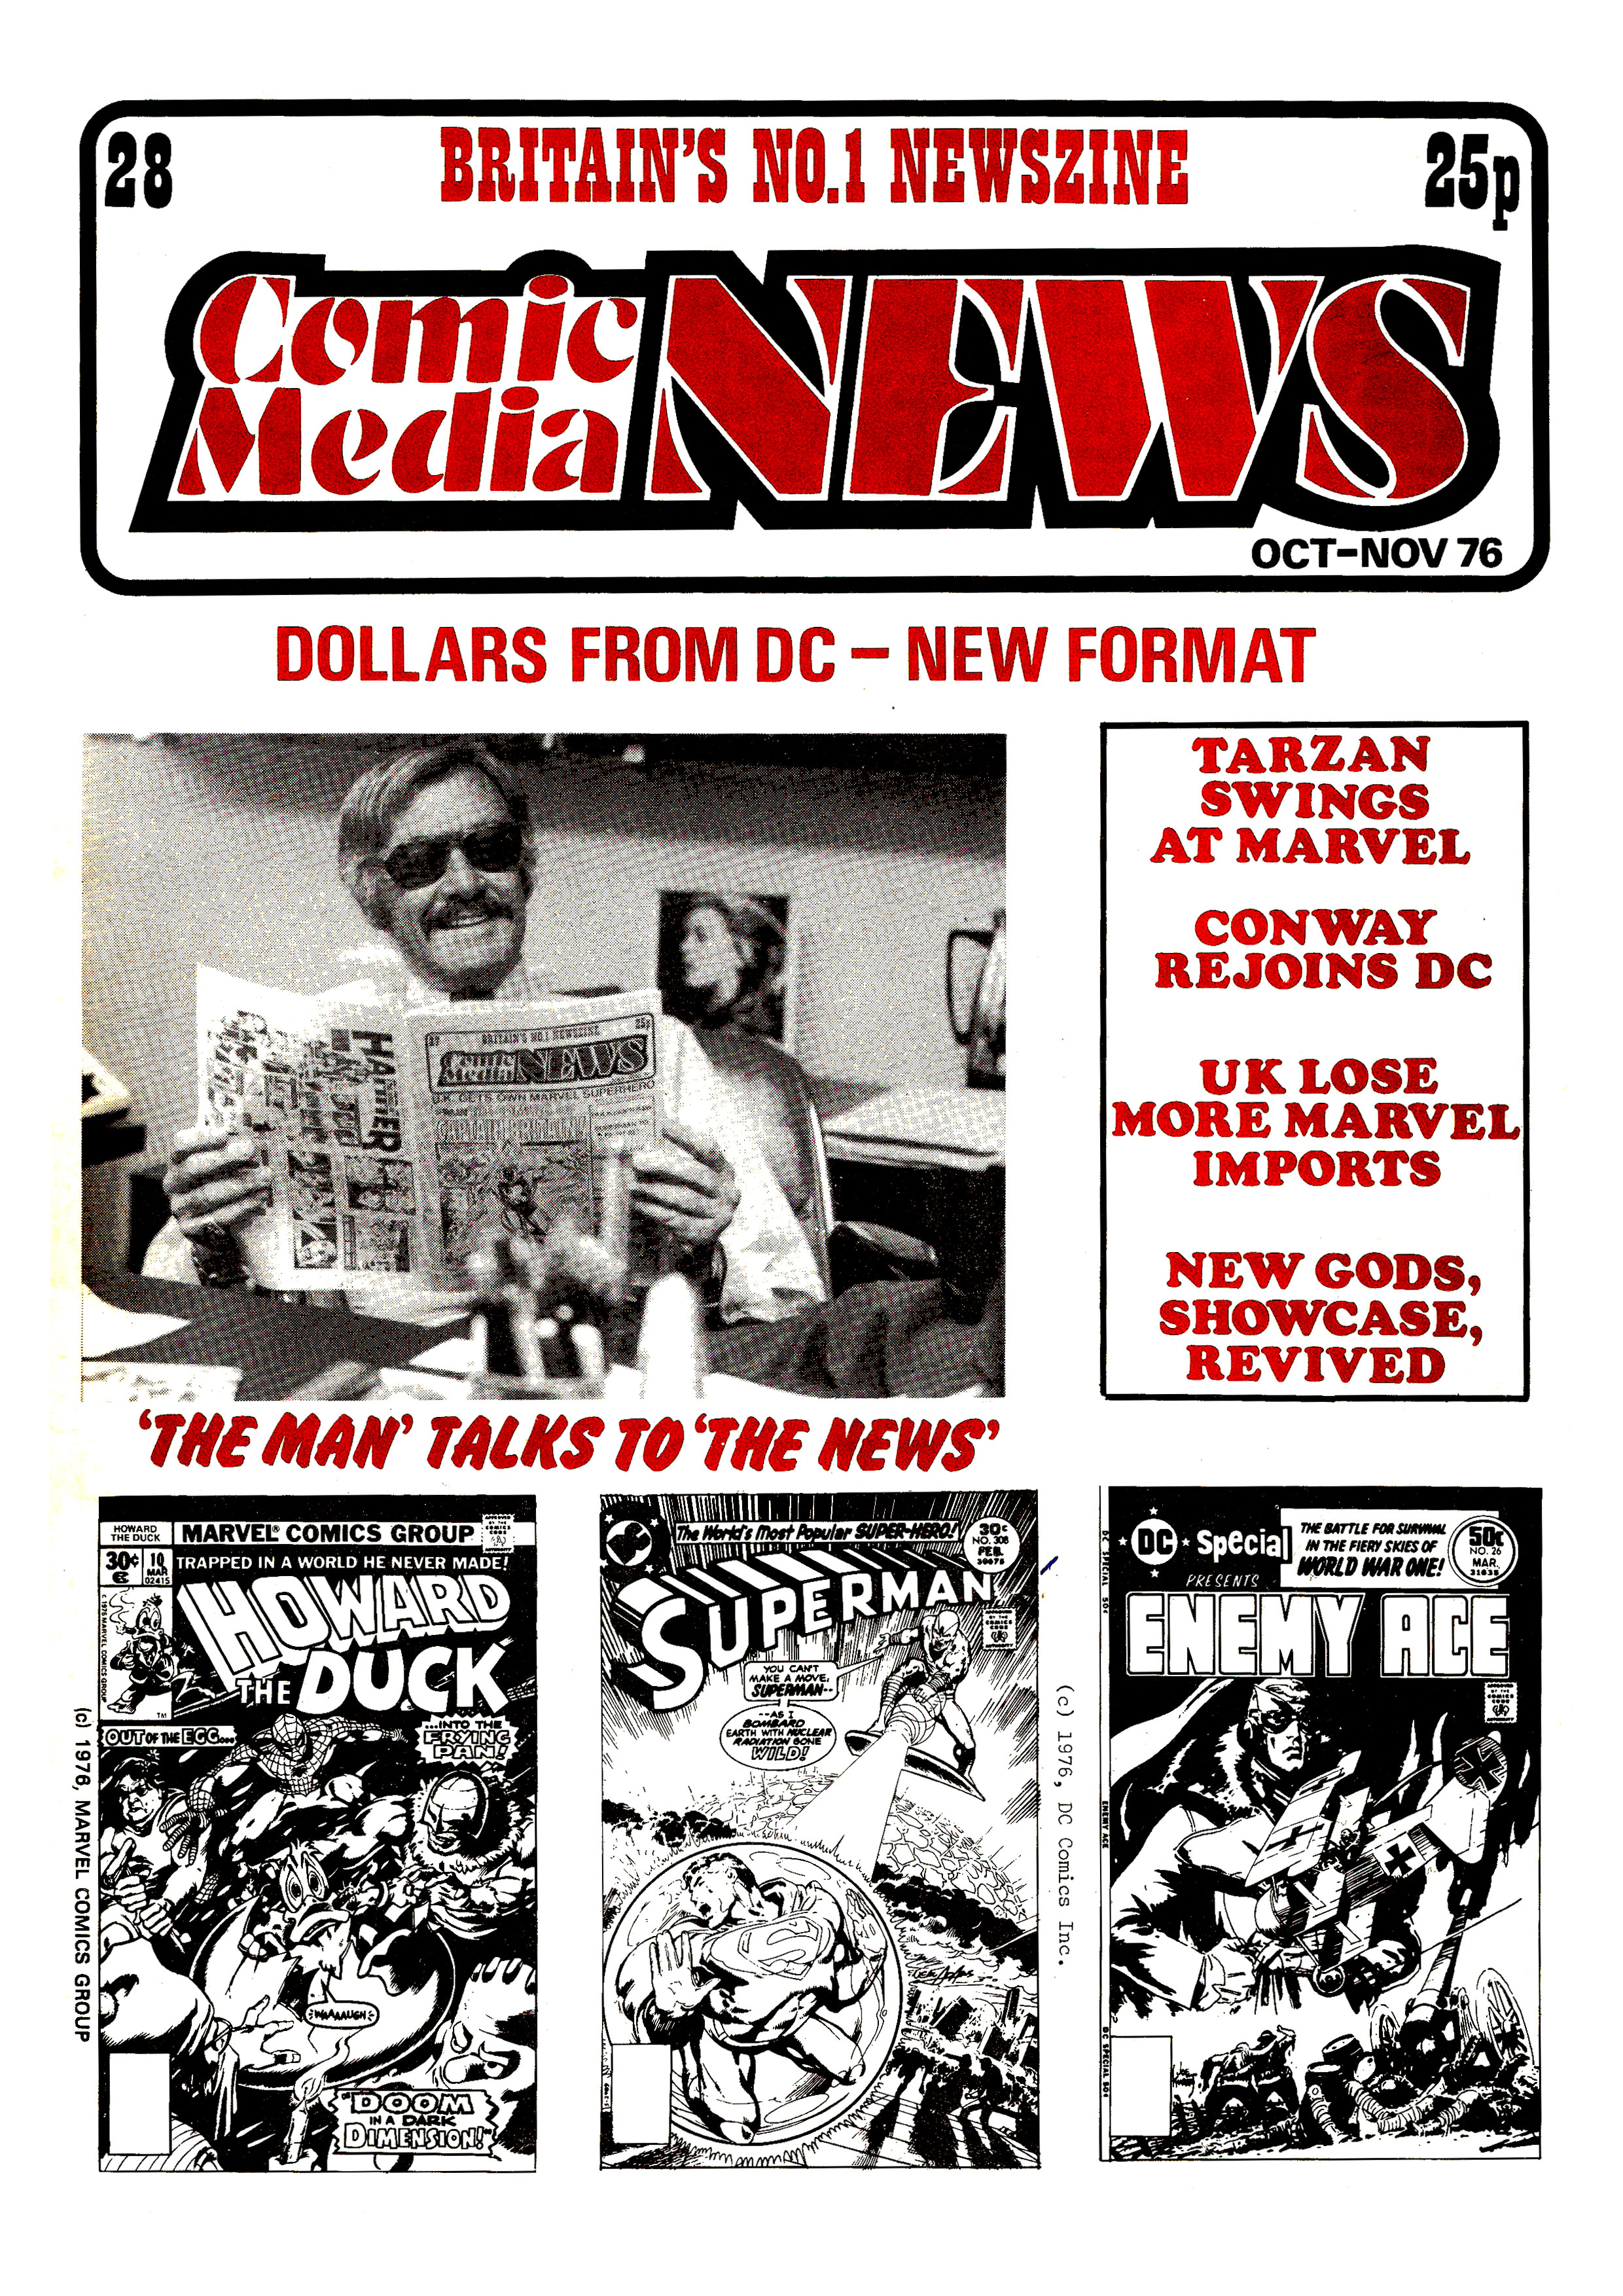 Comic Media News 28 - Cover